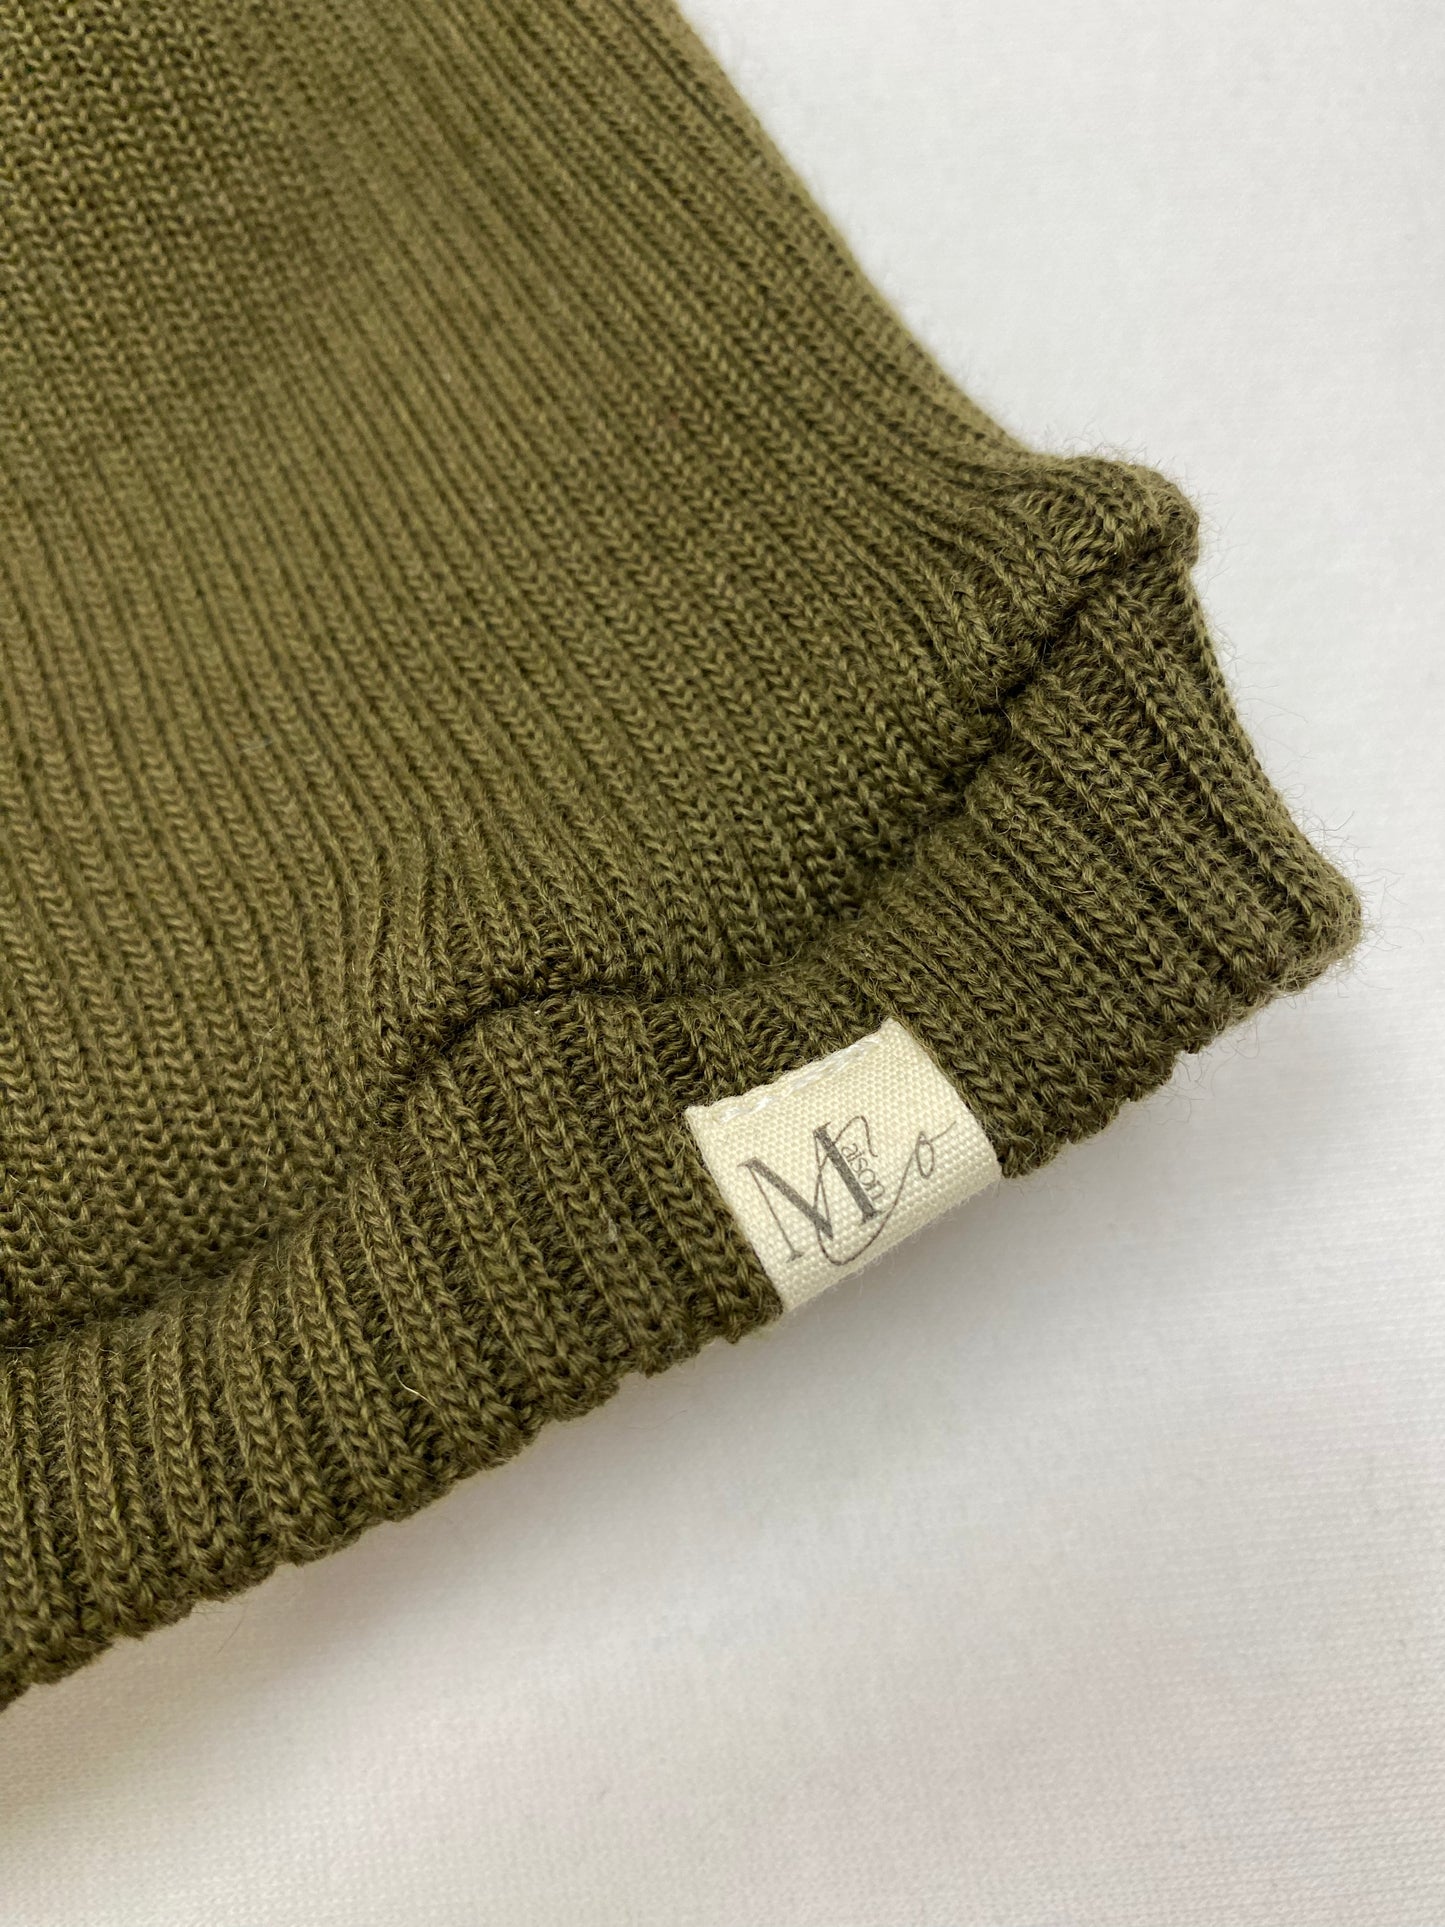 Gabriel - The knit sweater